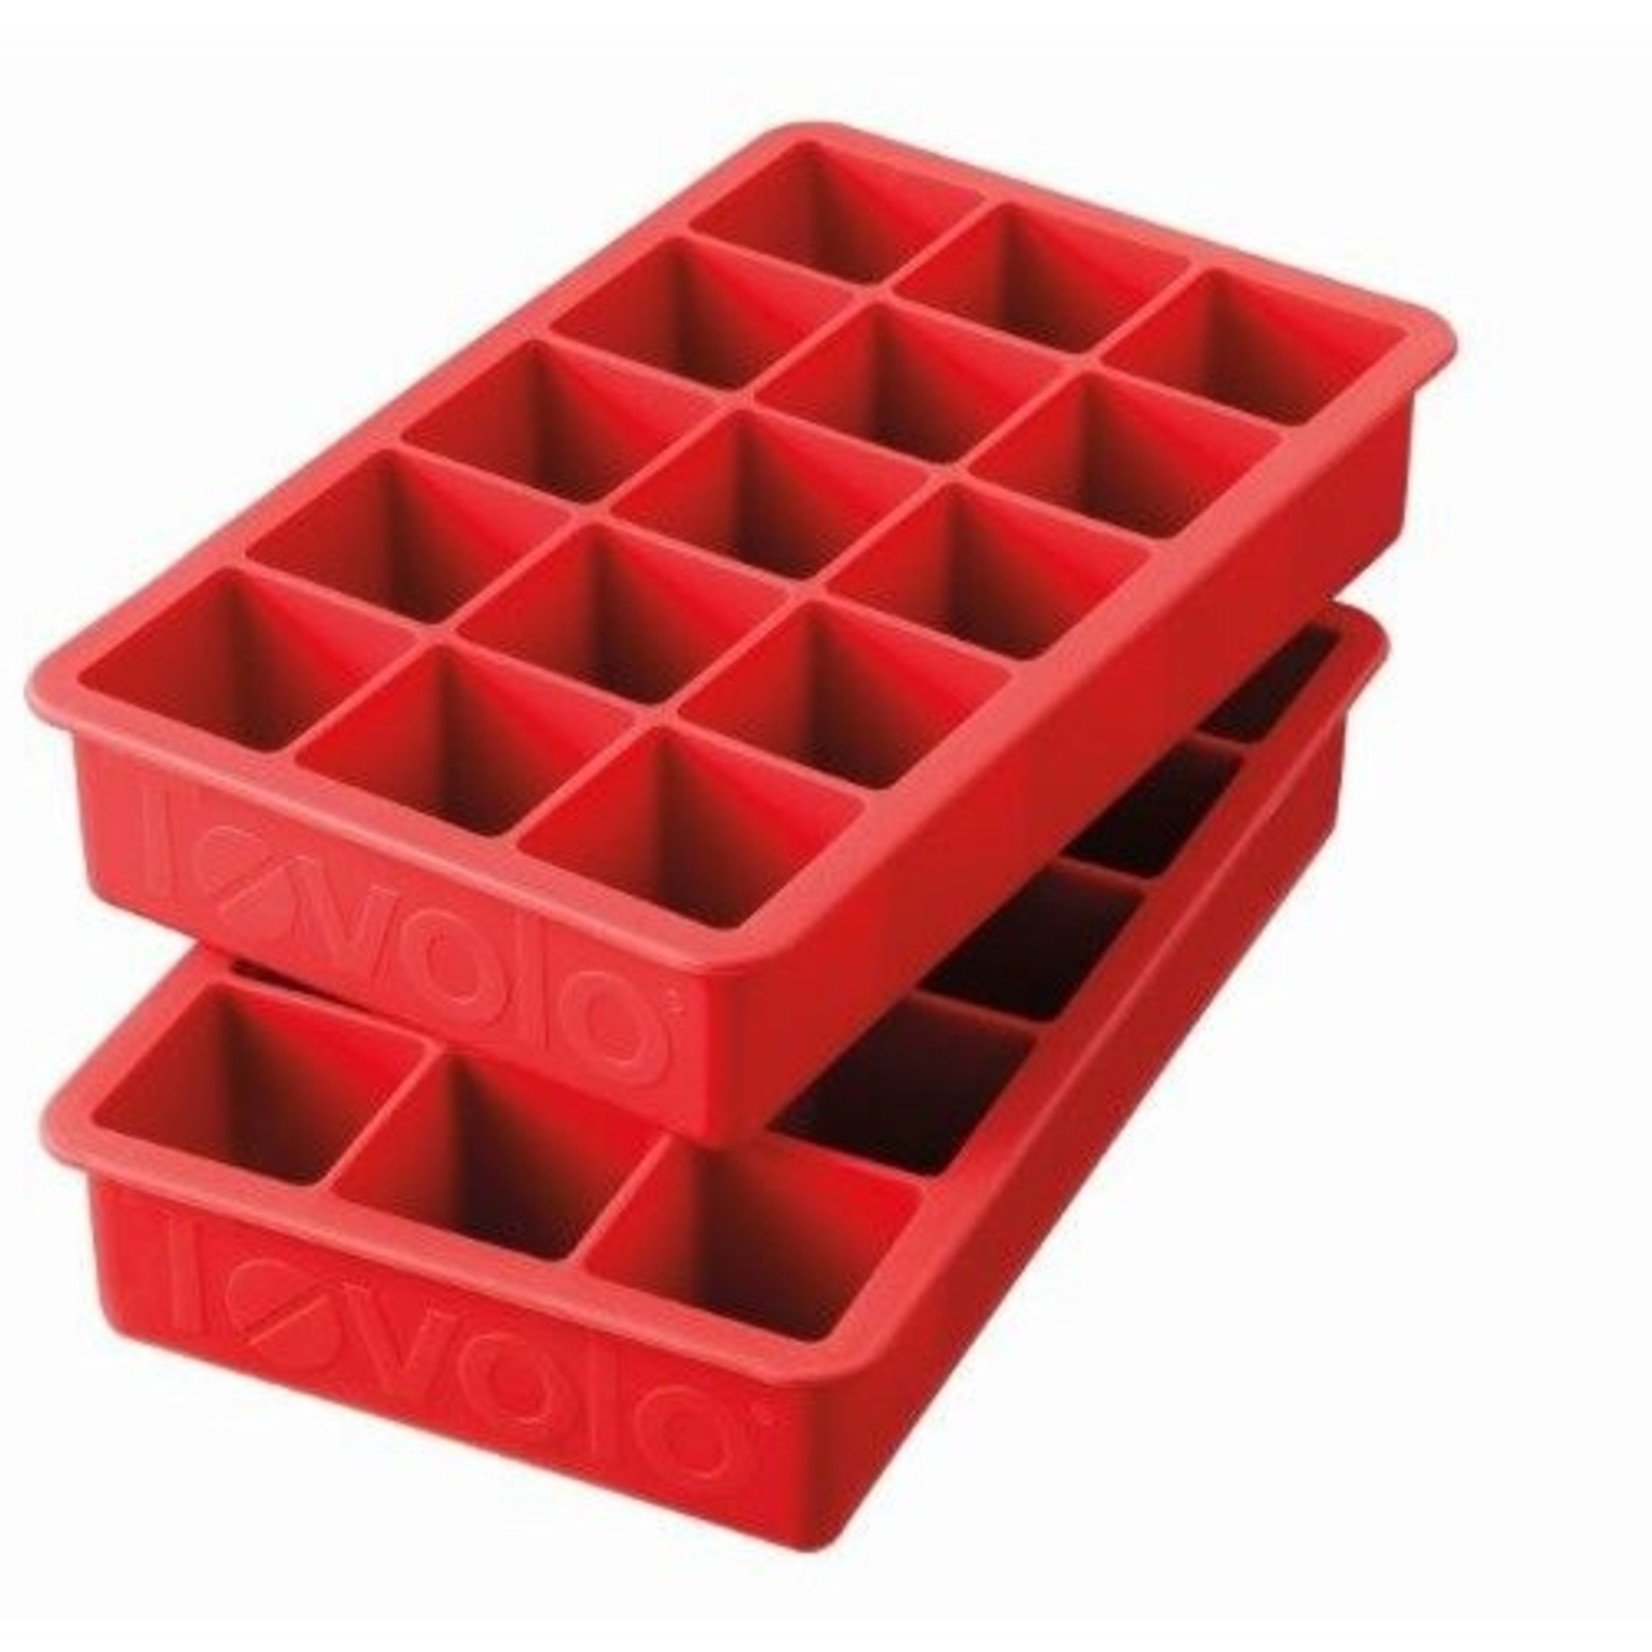 https://cdn.shoplightspeed.com/shops/647991/files/35507414/1652x1652x1/tovolo-perfect-cube-ice-tray-ruby-red.jpg